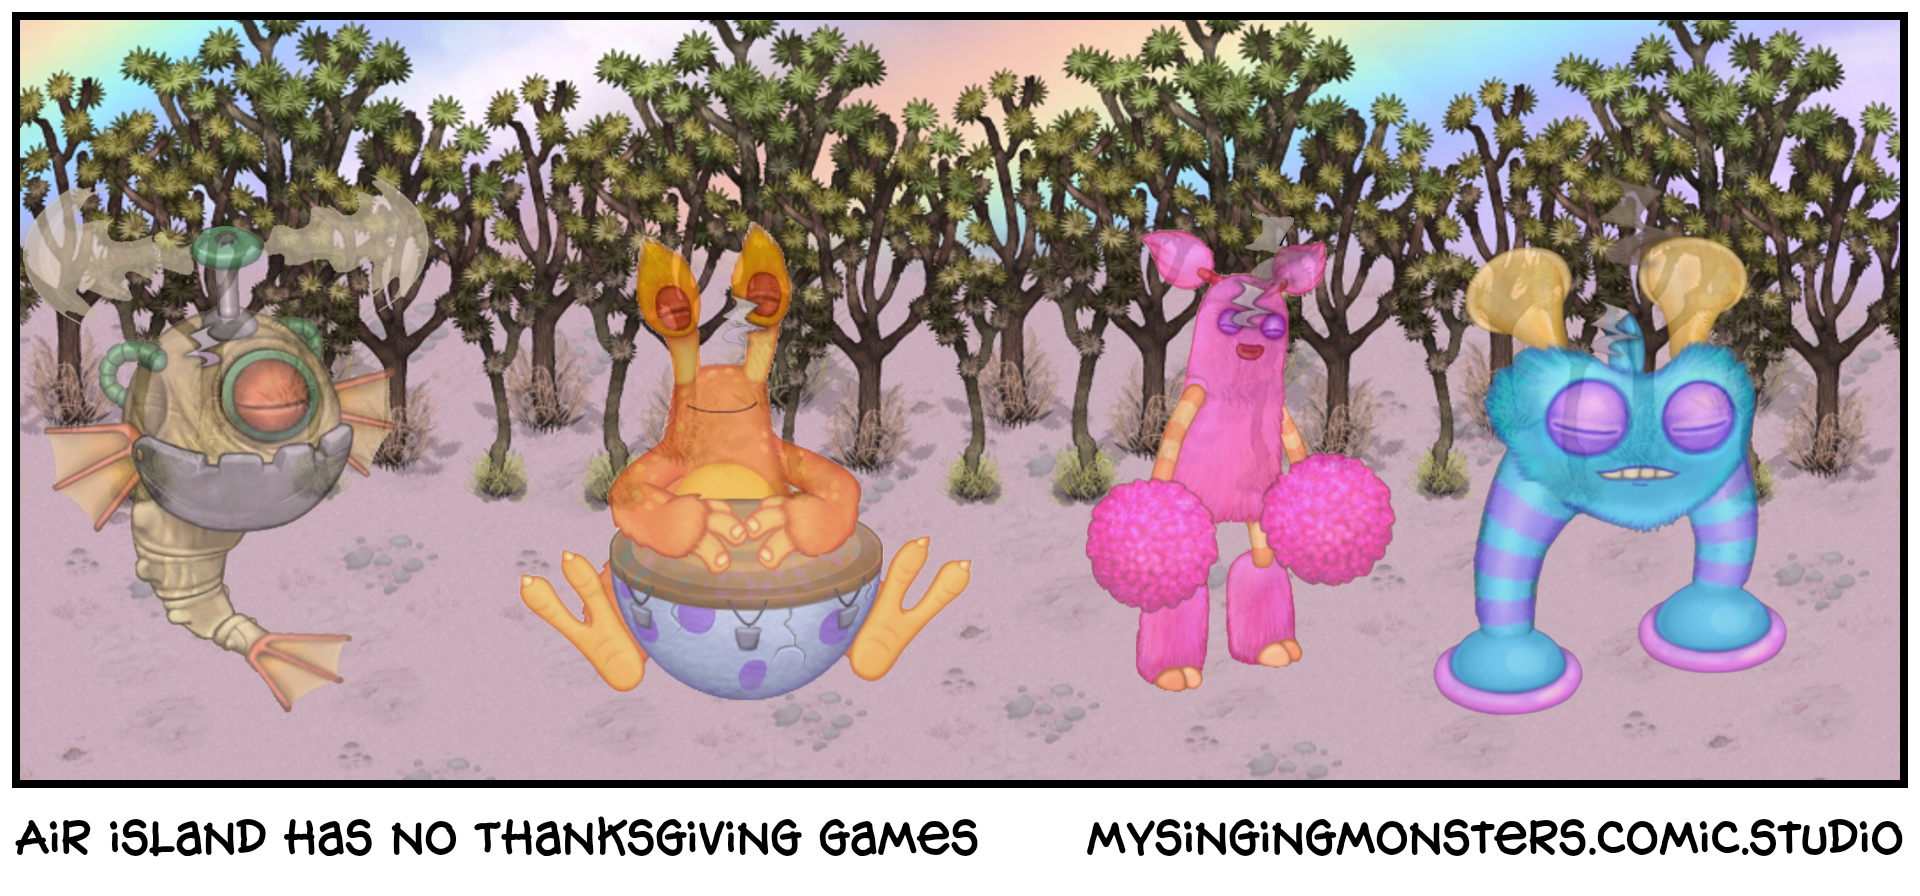 Air island has no Thanksgiving games